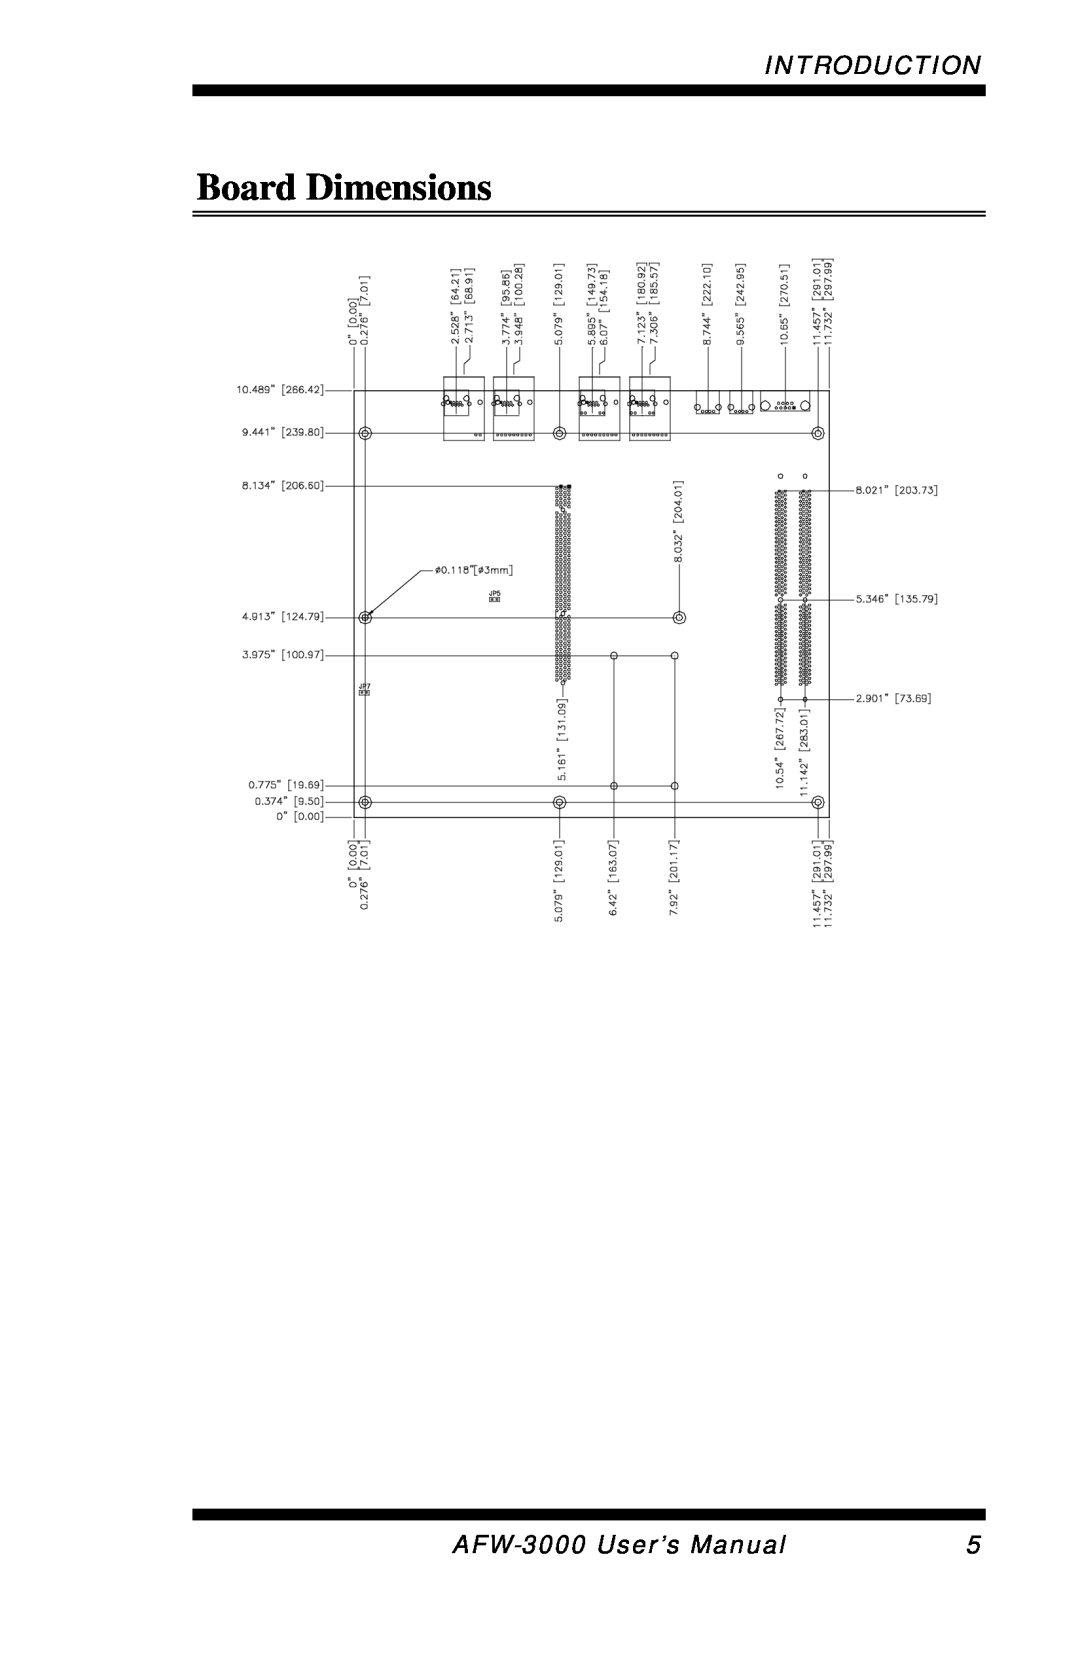 Intel E7501 user manual Board Dimensions, Introduction, AFW-3000User’s Manual 